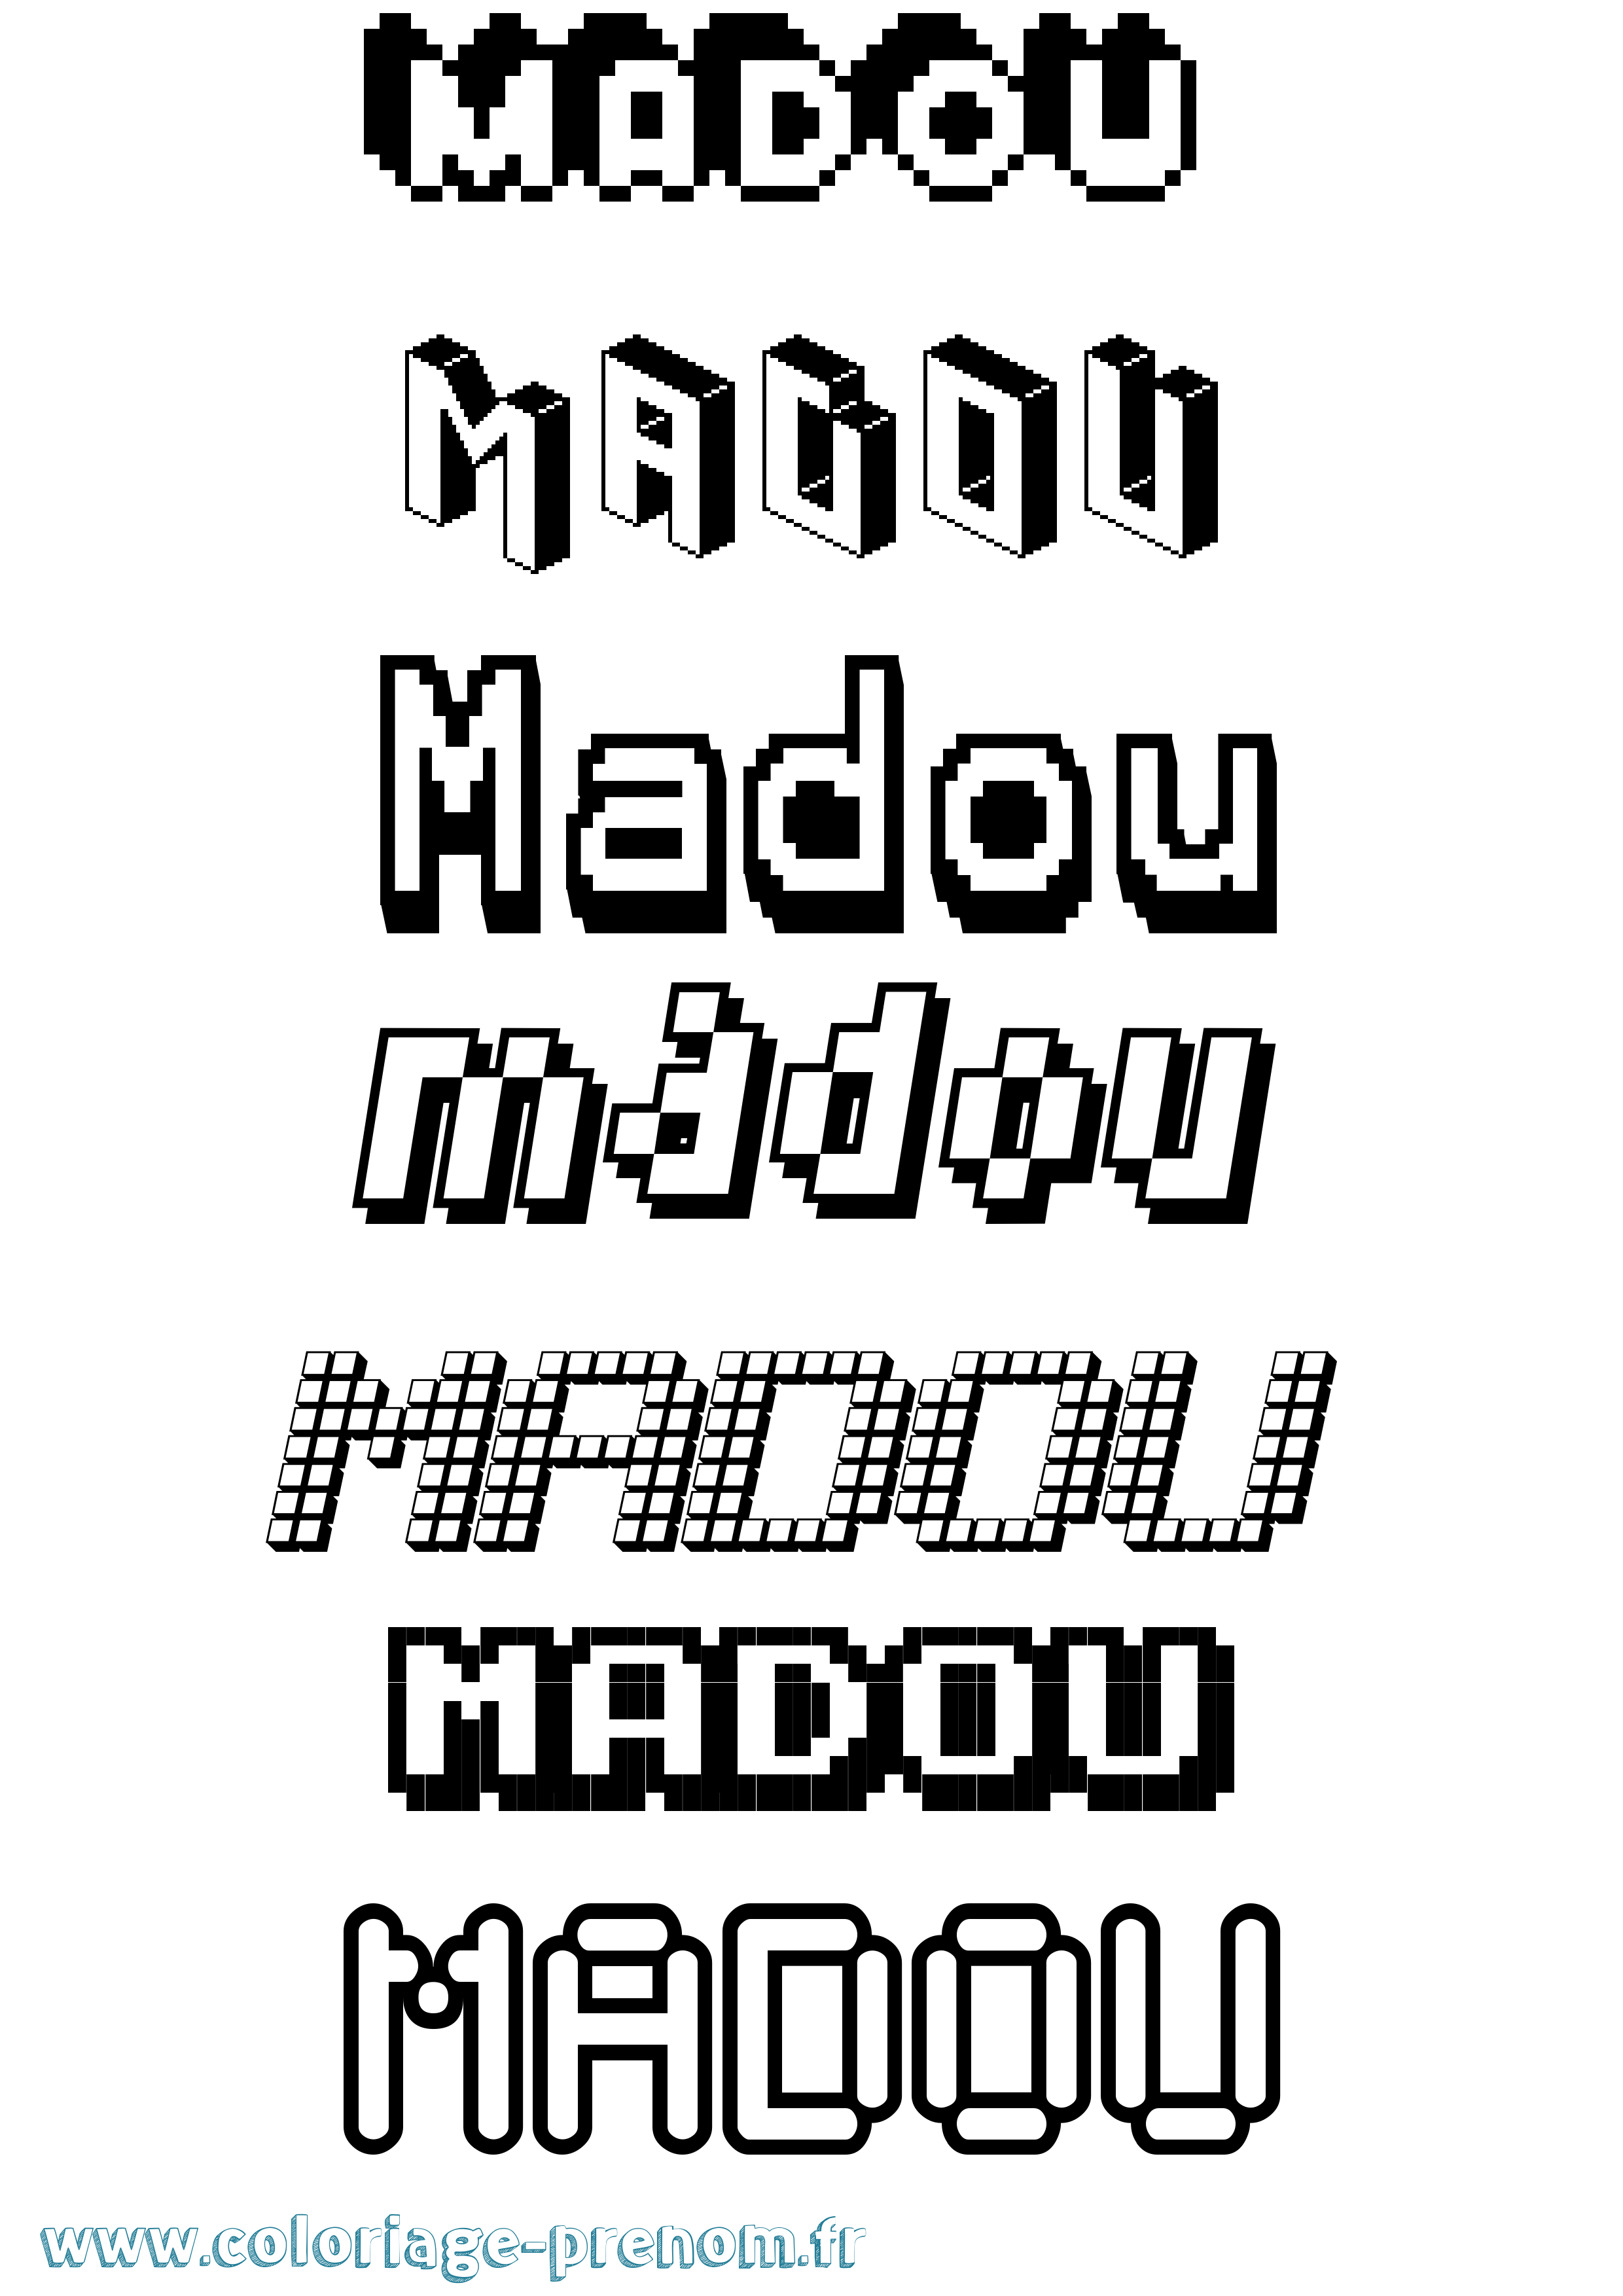 Coloriage prénom Madou Pixel